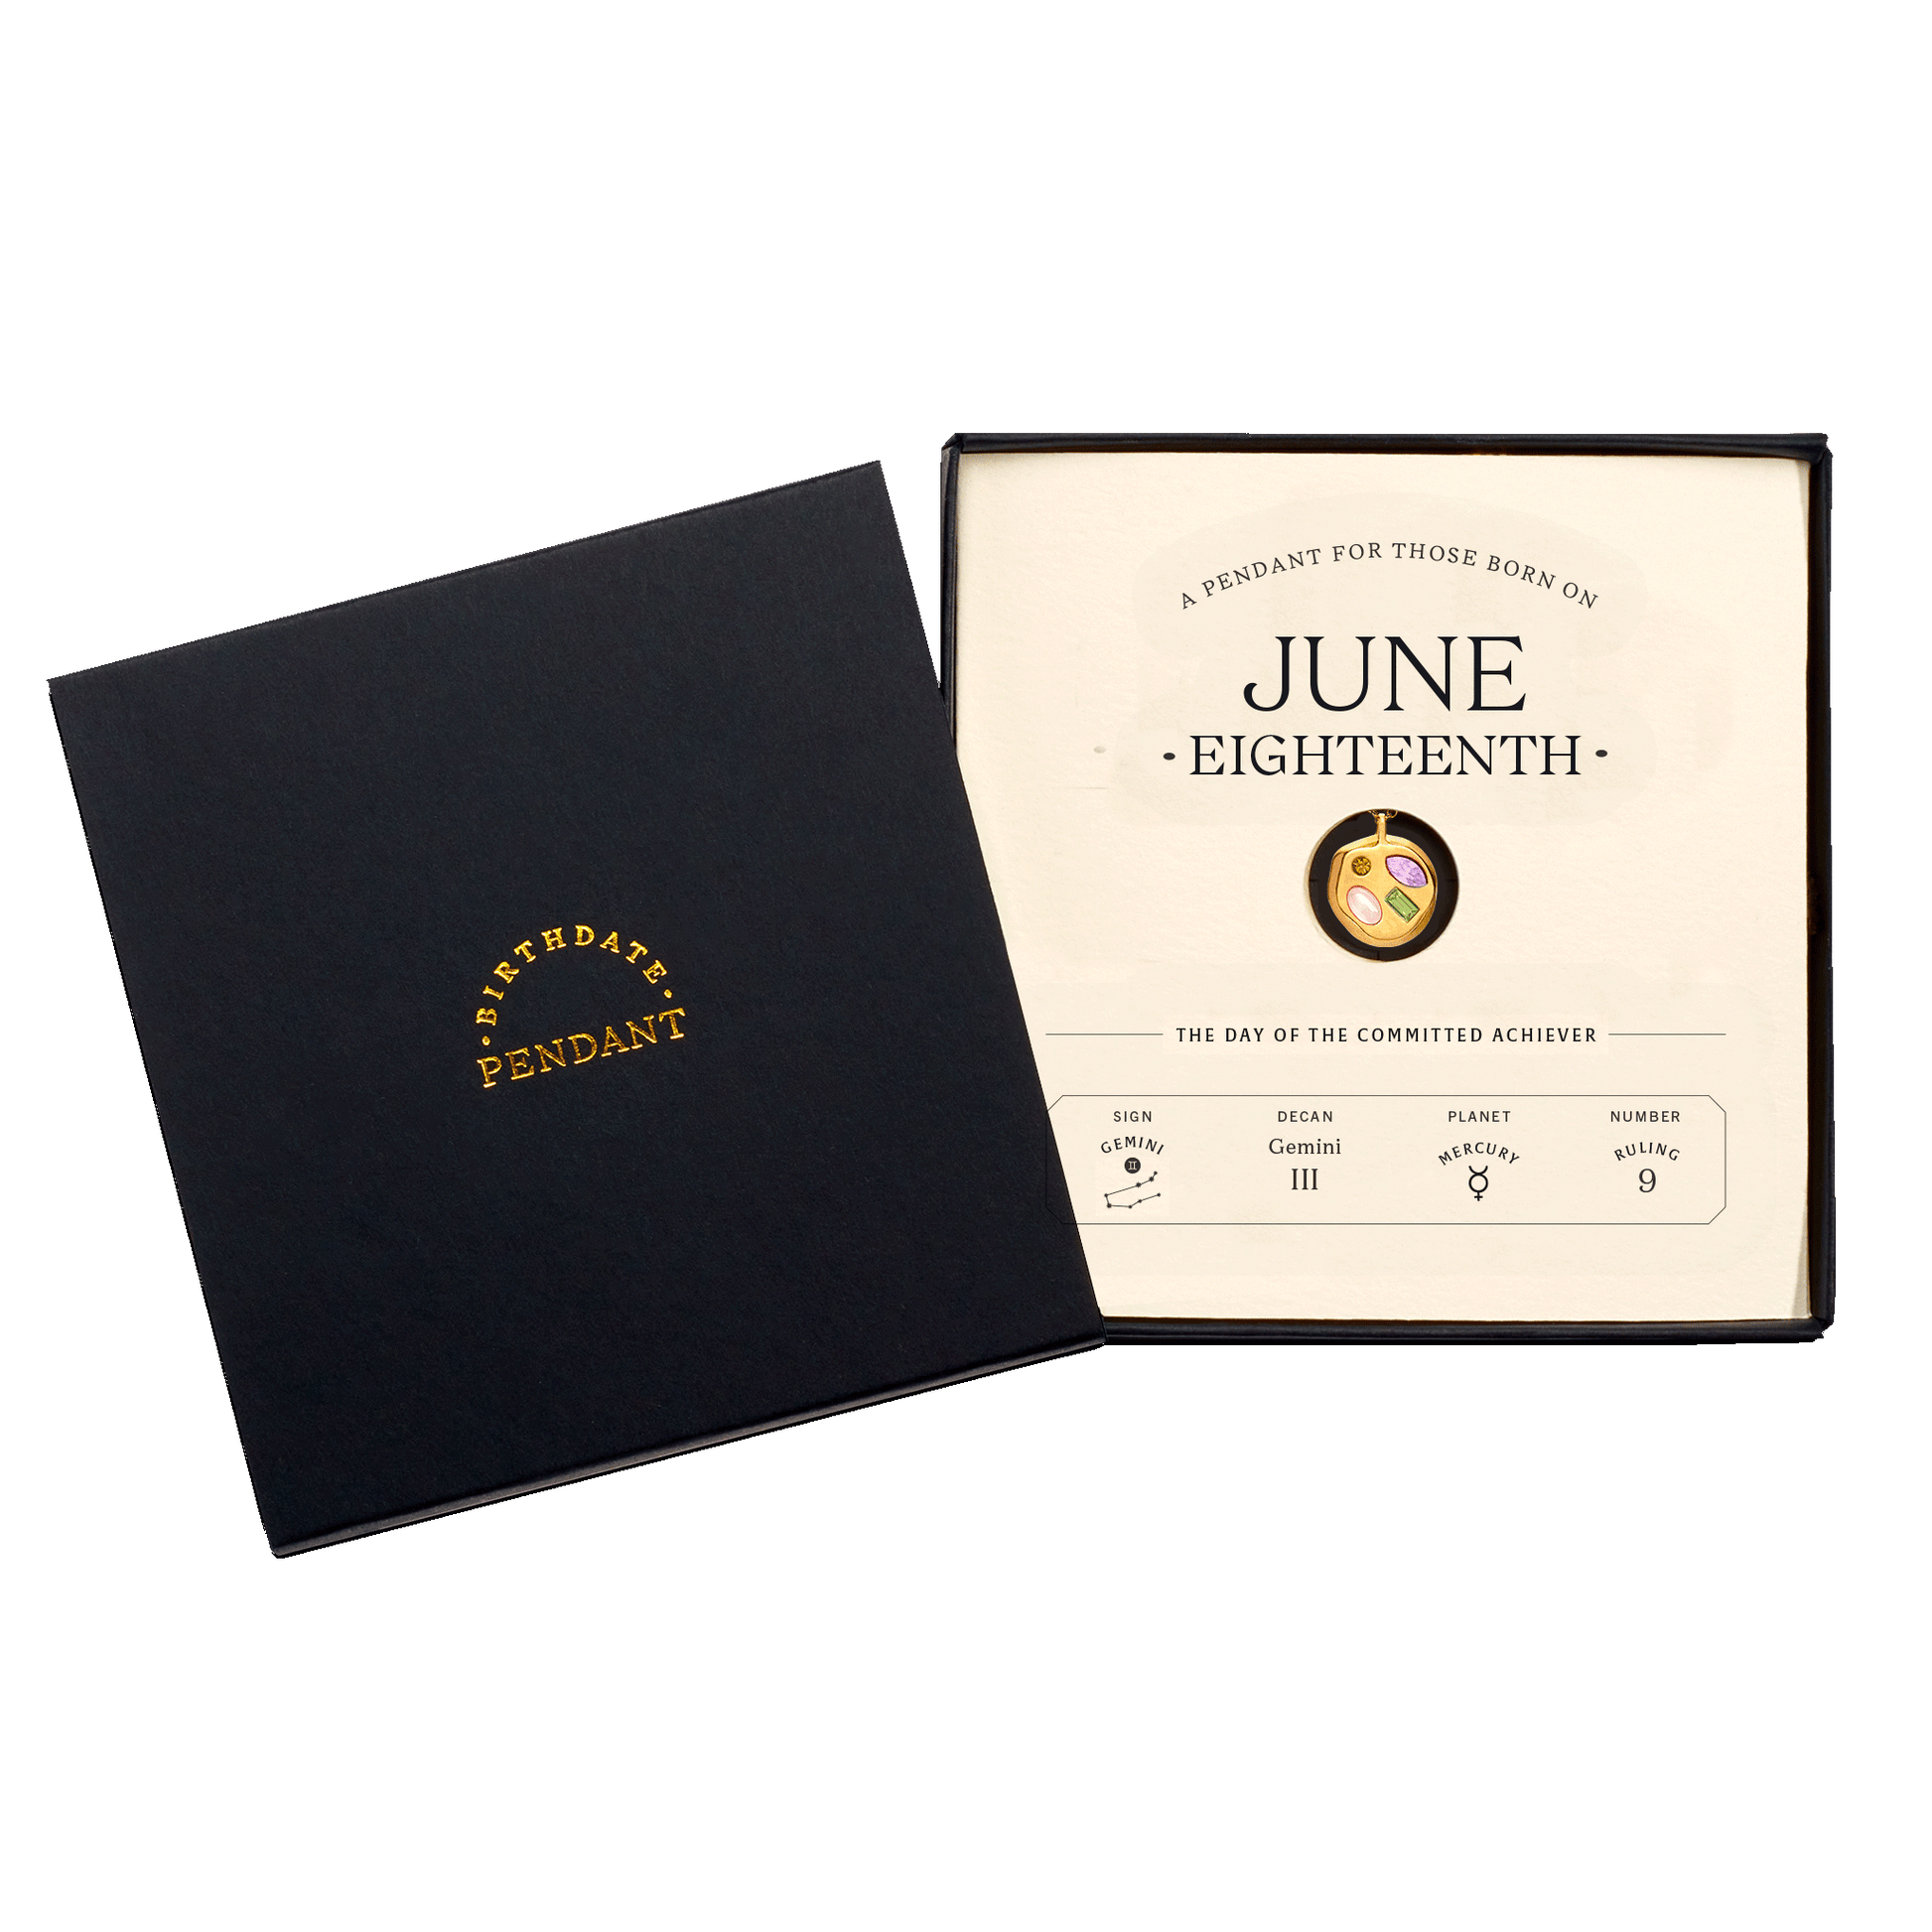 The June Eighteenth Pendant inside its box